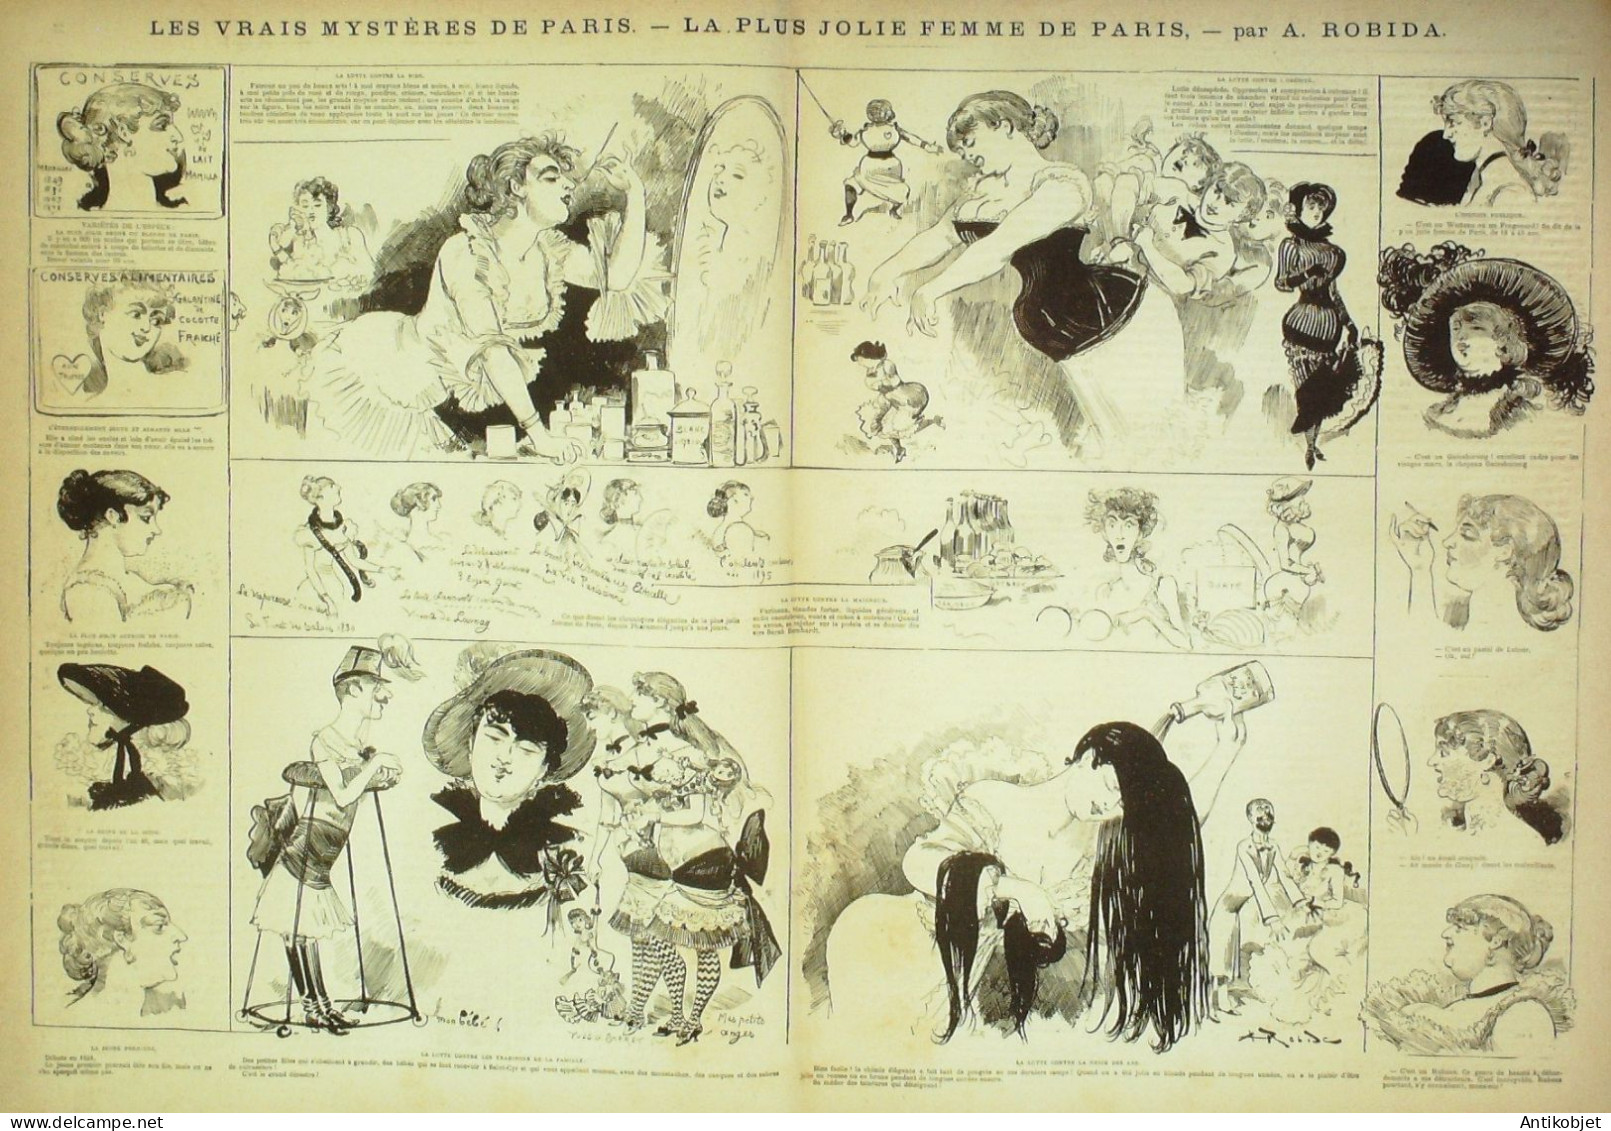 La Caricature 1882 N°108 Mystères De PAris Robida Skating Ballet Bach - Revues Anciennes - Avant 1900